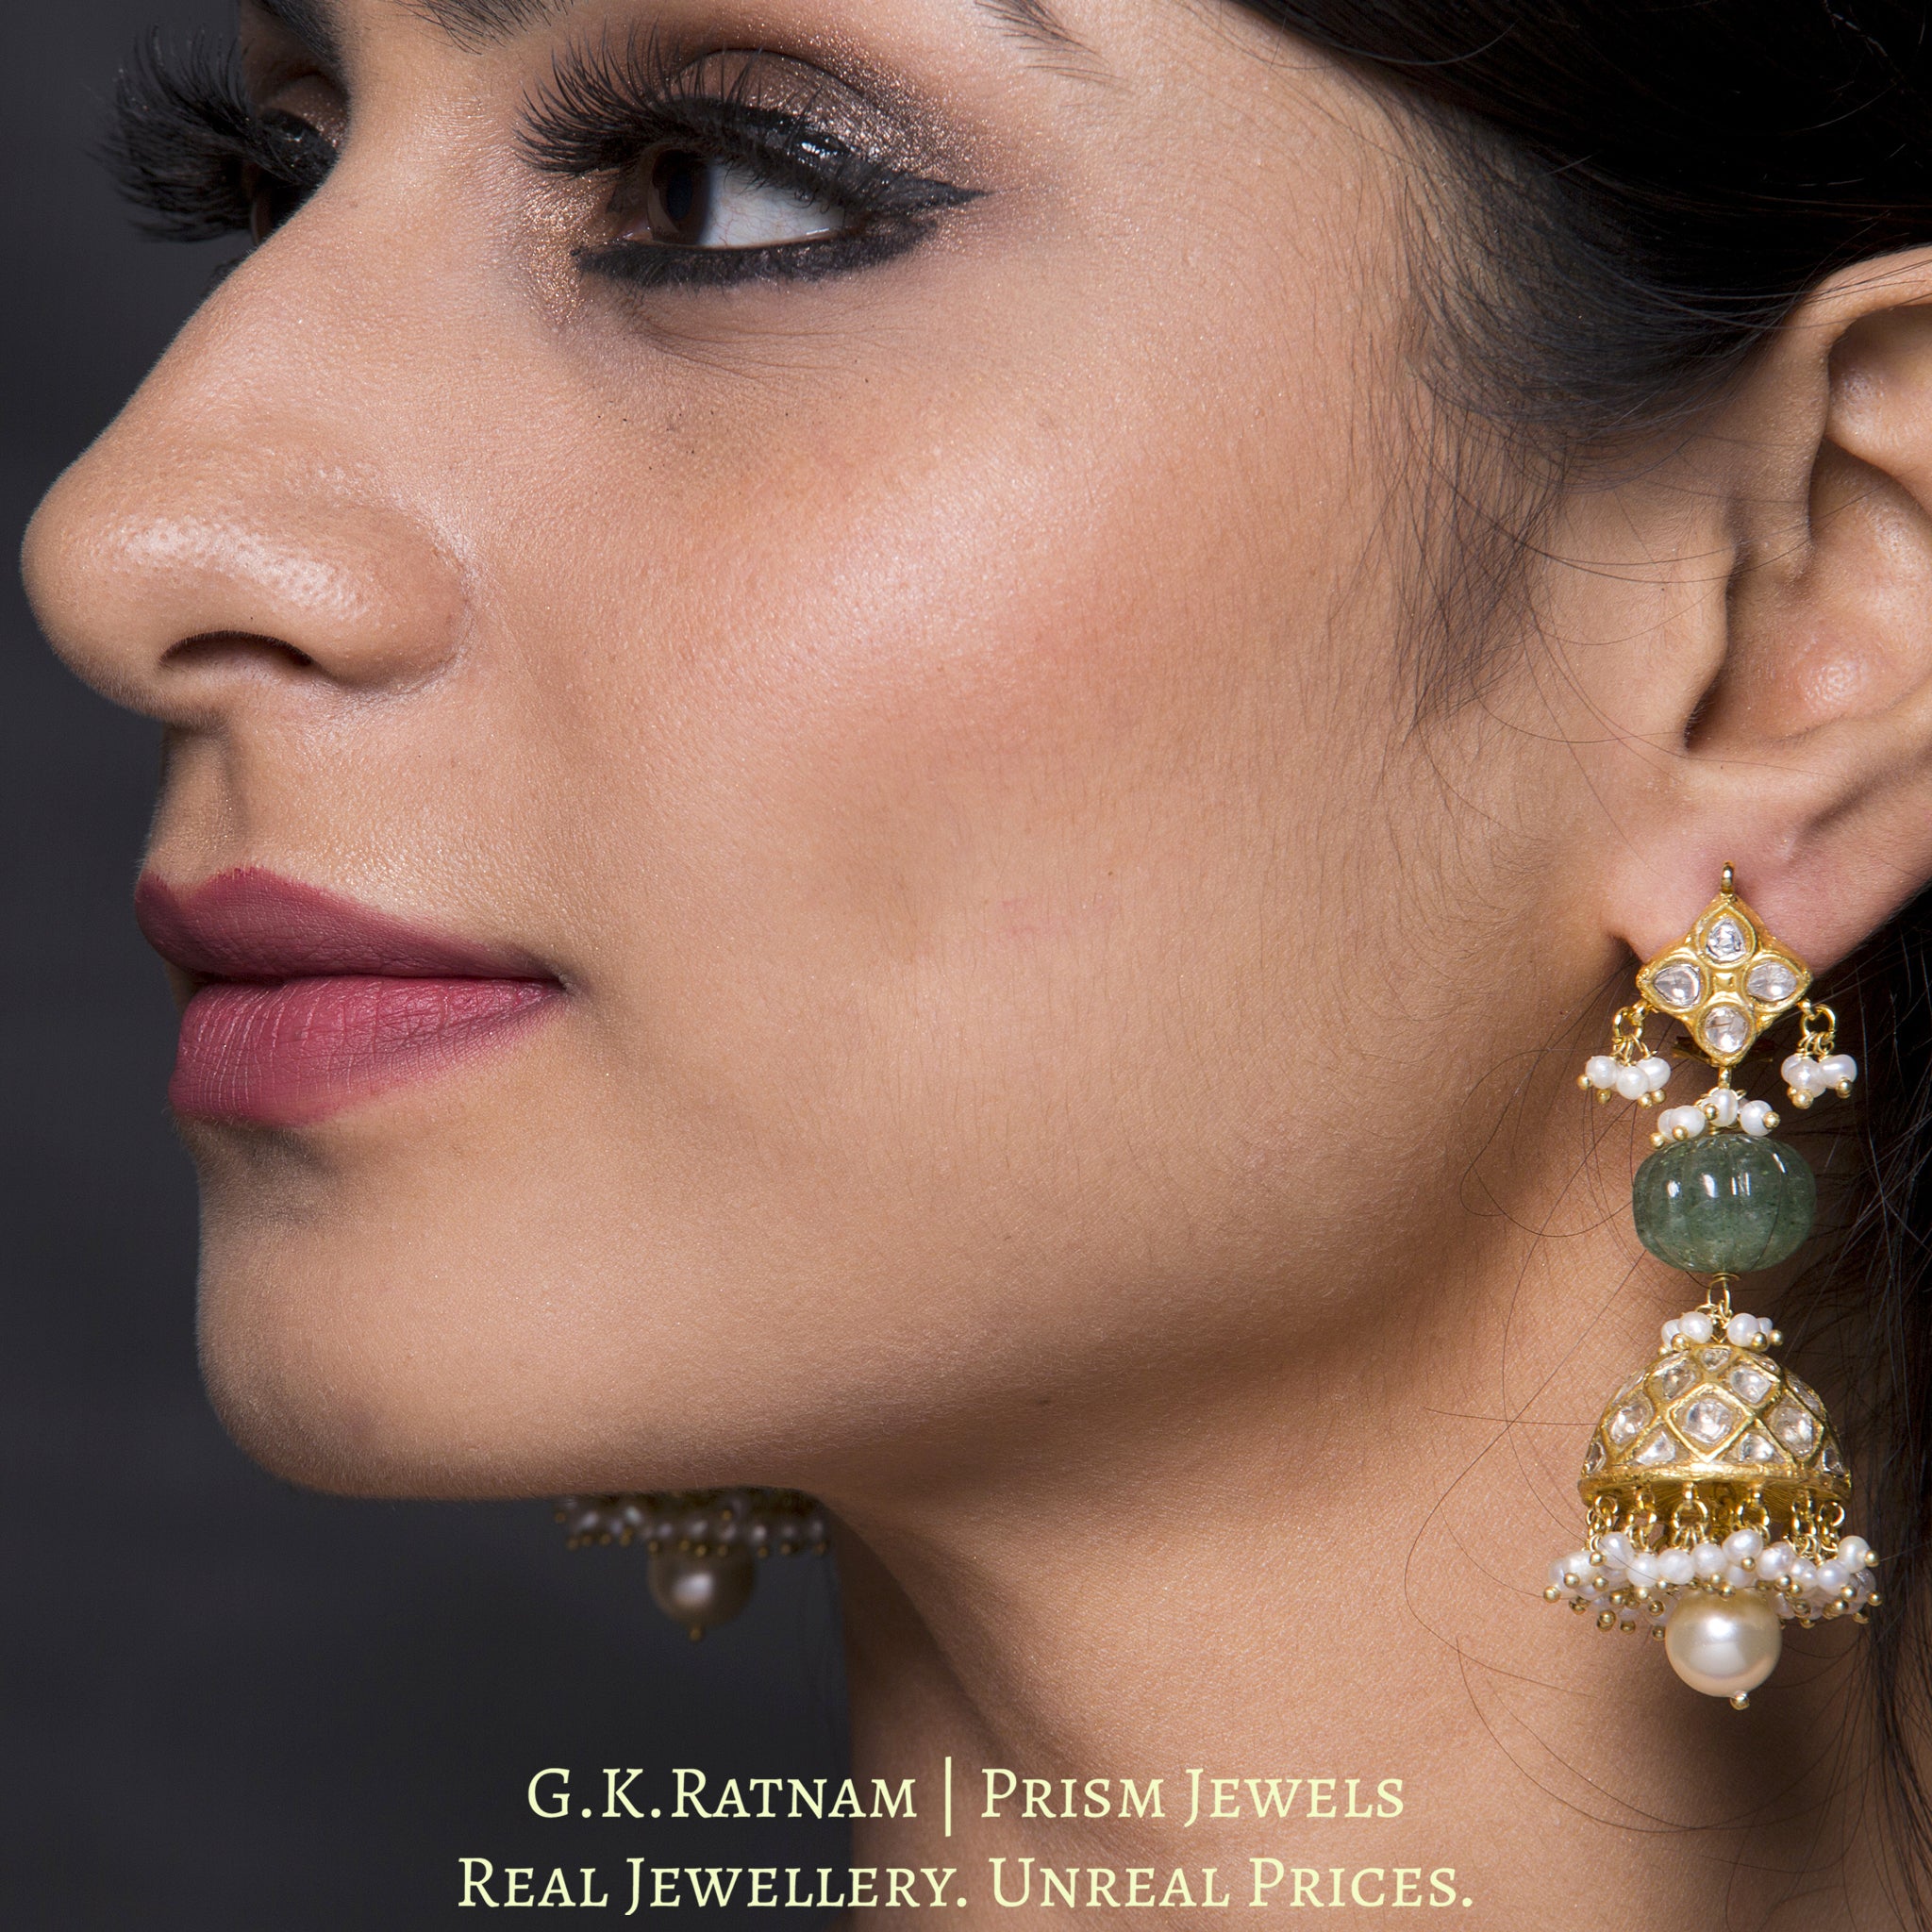 23k Gold and Diamond Polki Jhumki Earring Pair with Aventurine Quartz melons and natural hyderabadi pearls